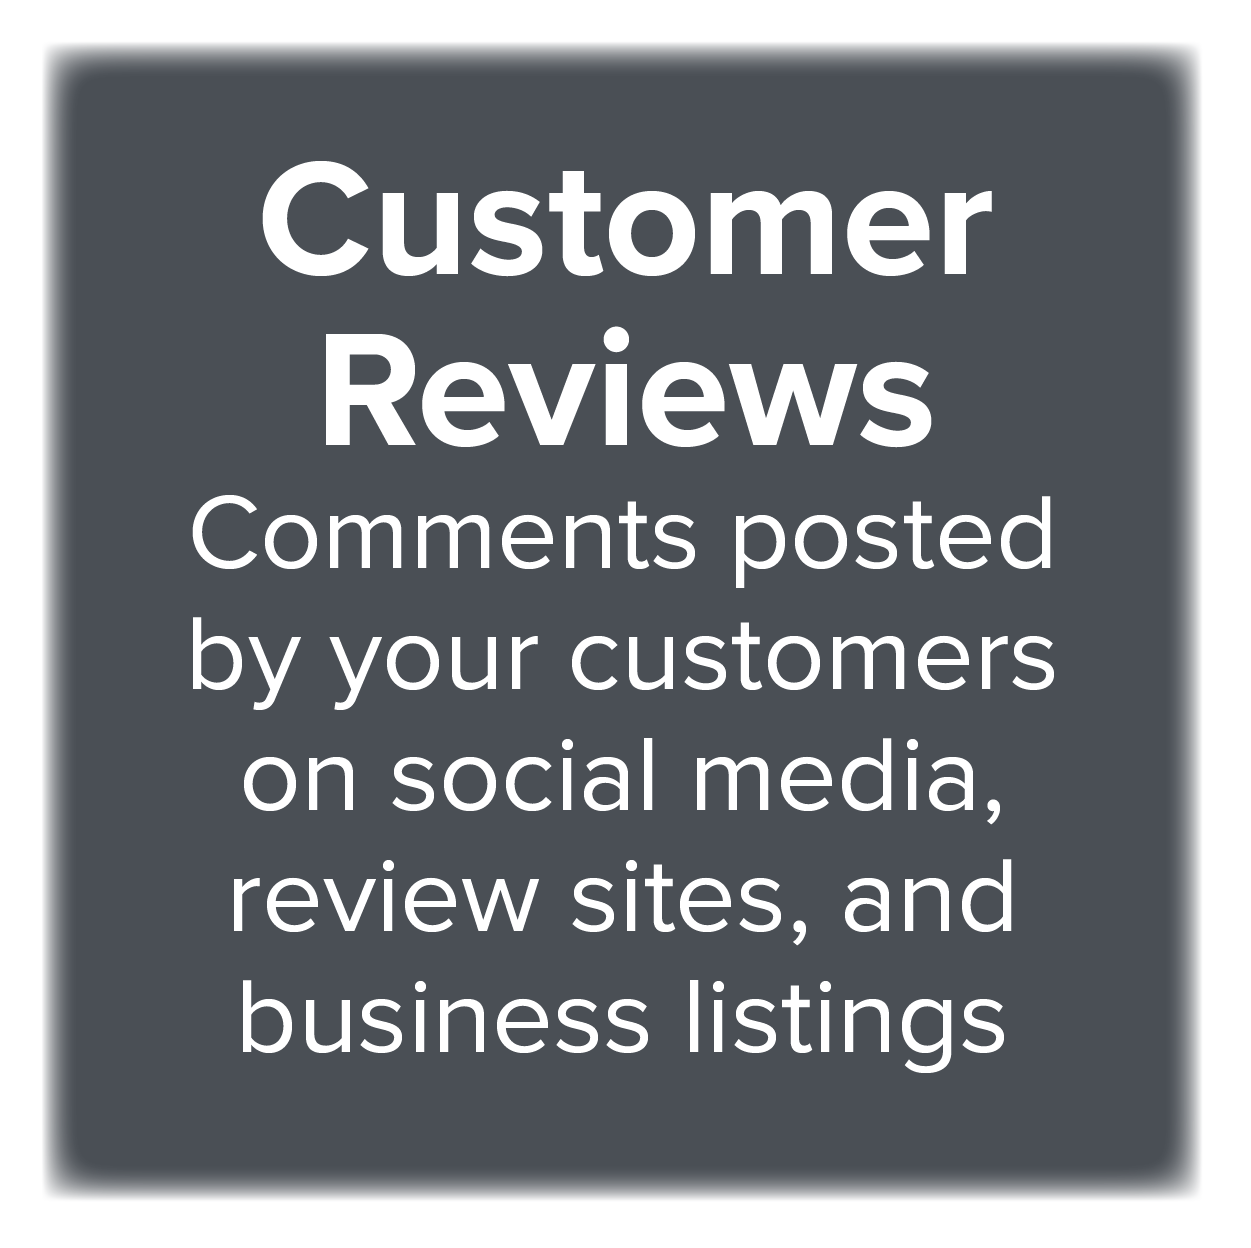 Customer reviews defined